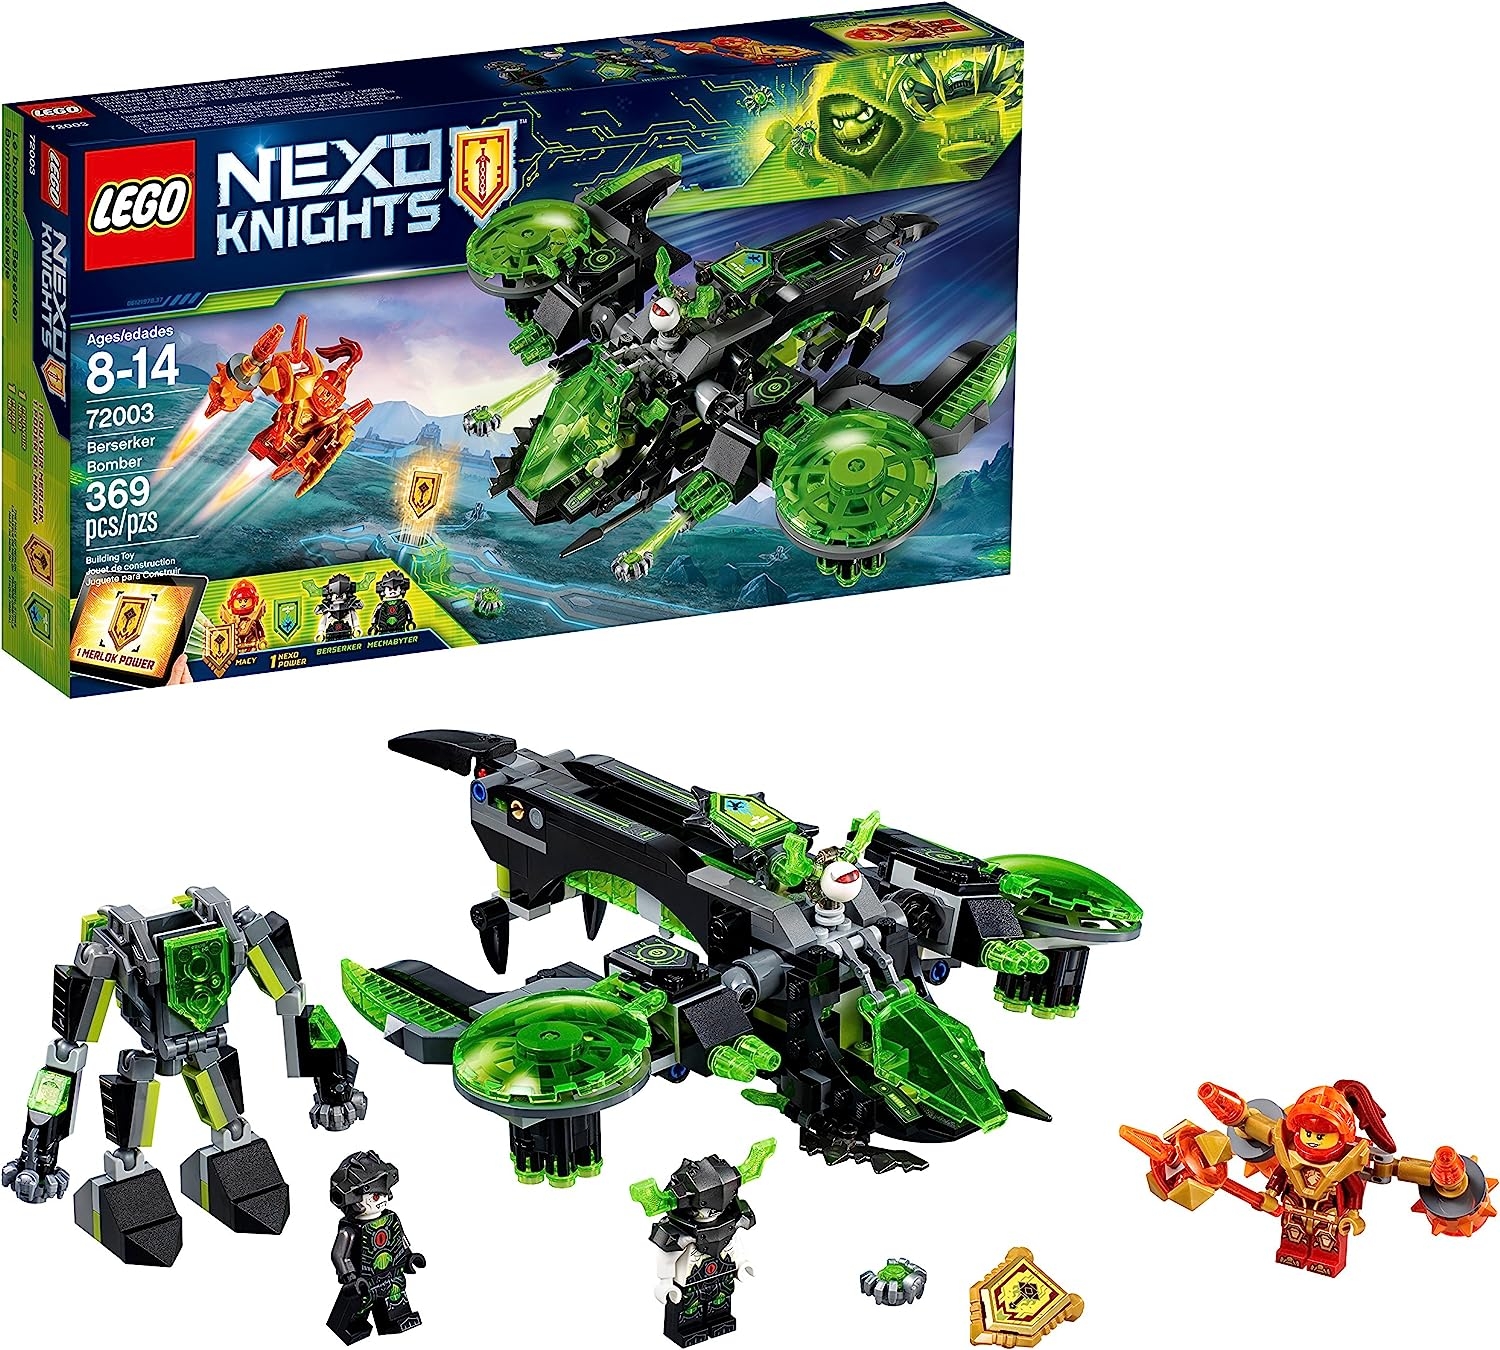 LEGO NEXO KNIGHTS Berserker Bomber 72003 Building Kit (369 Piece)   price checker  